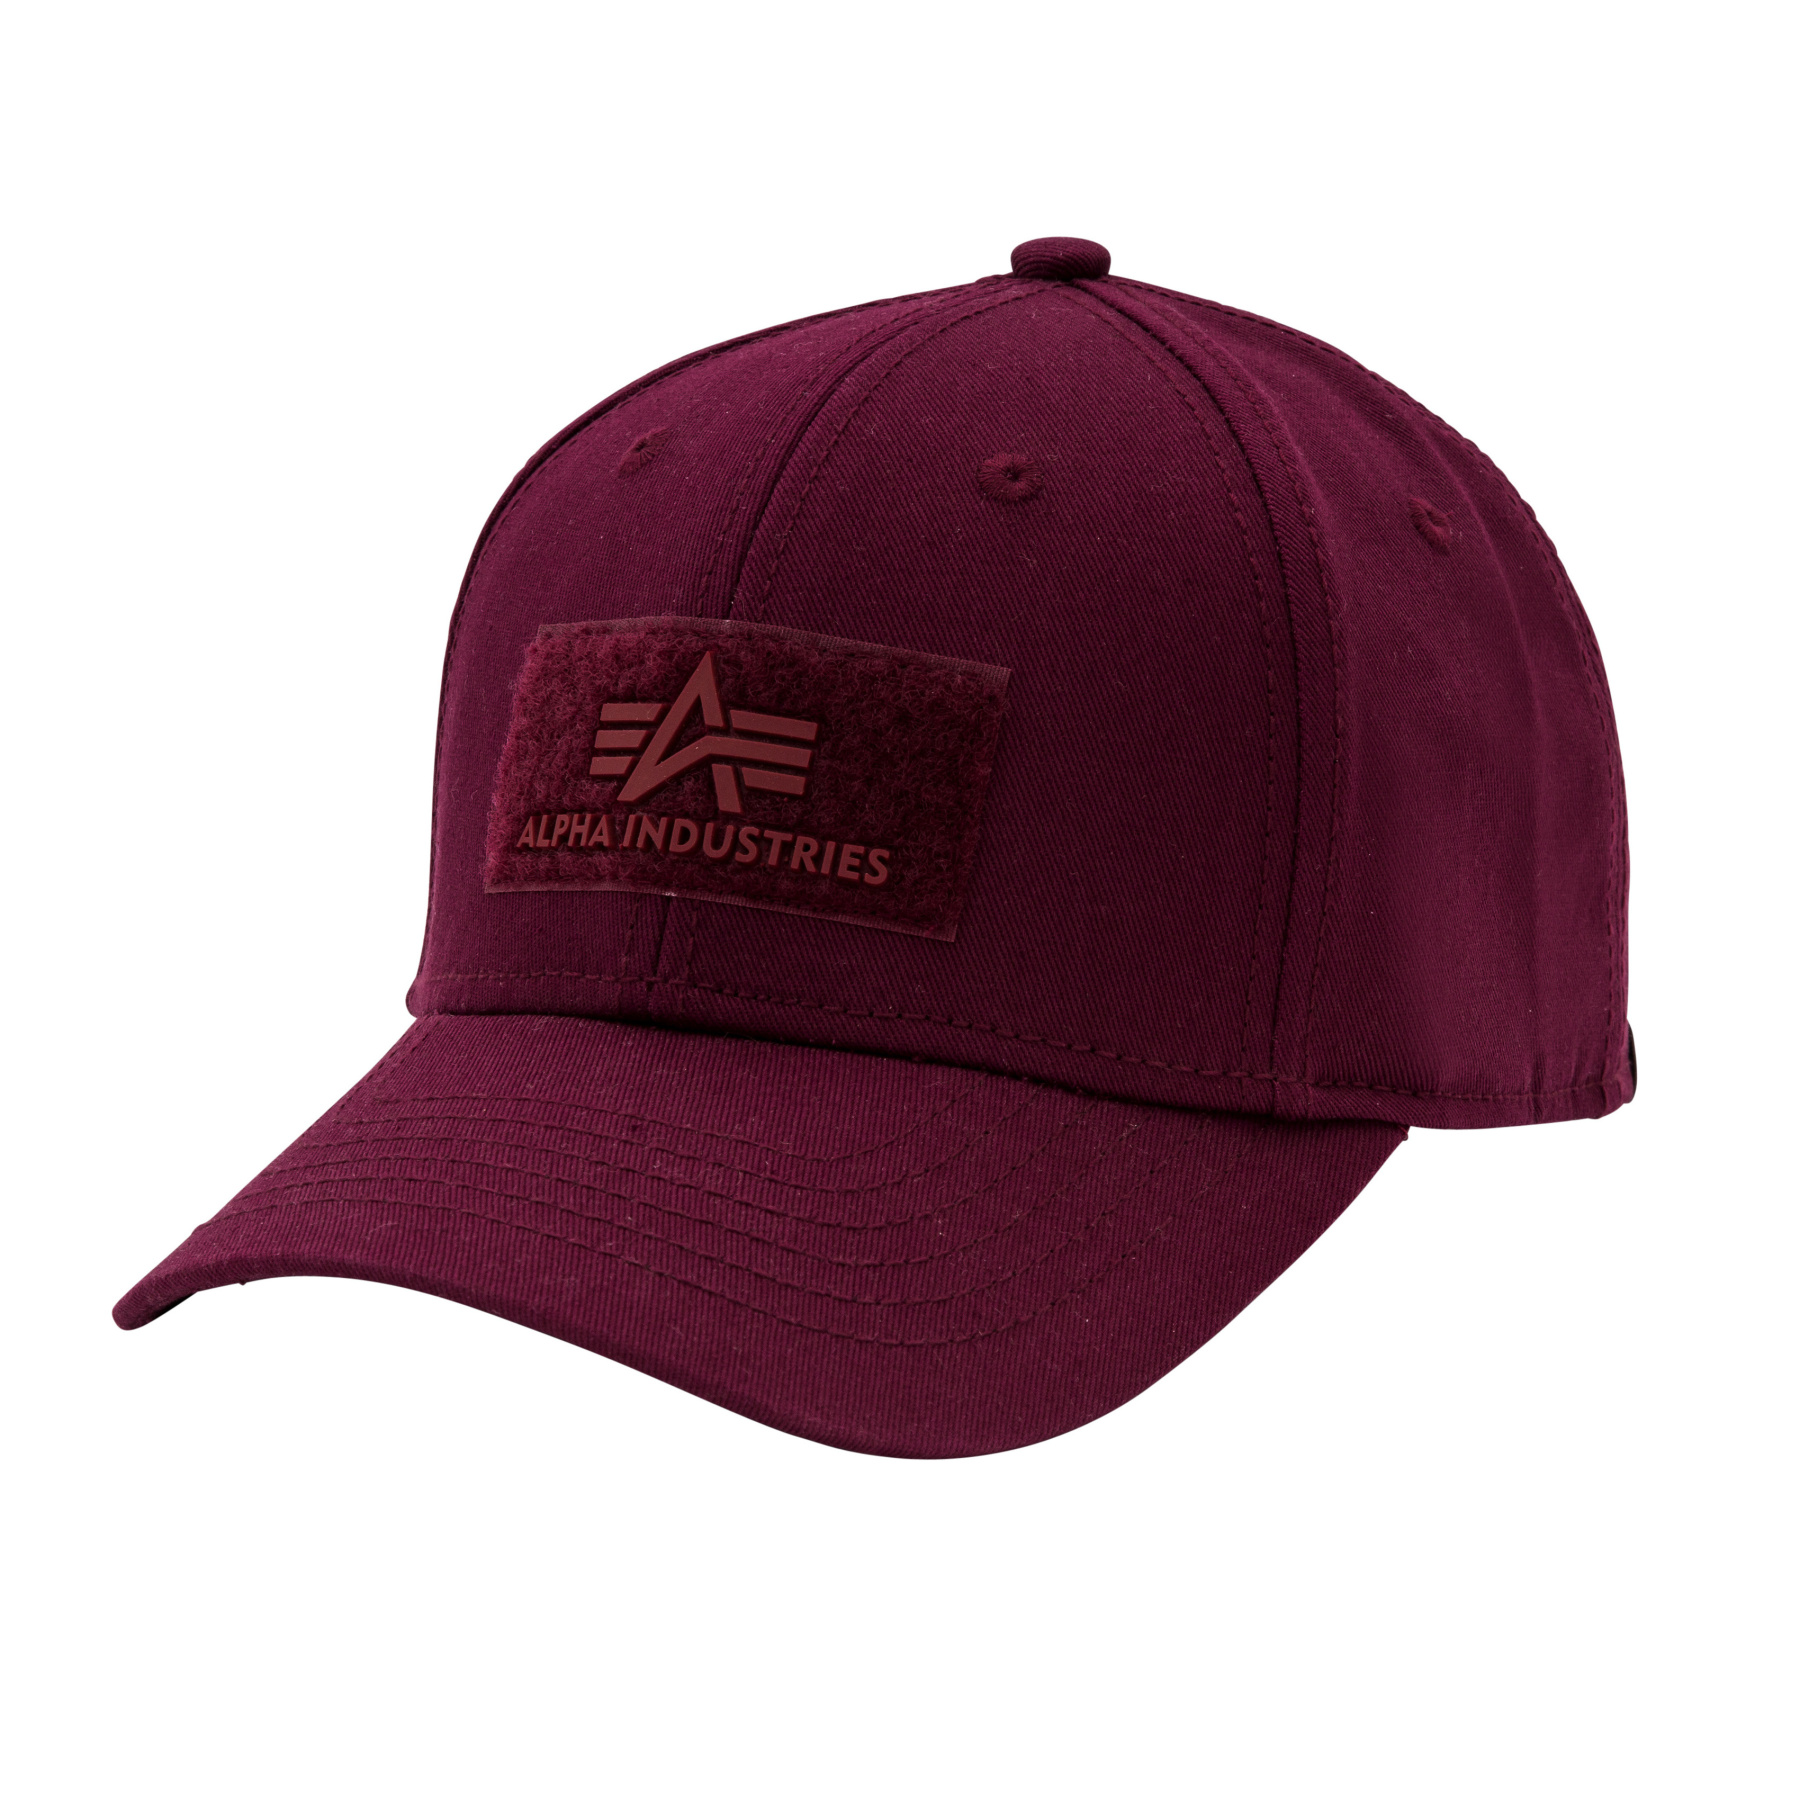 čepice VLC CAP burgundy